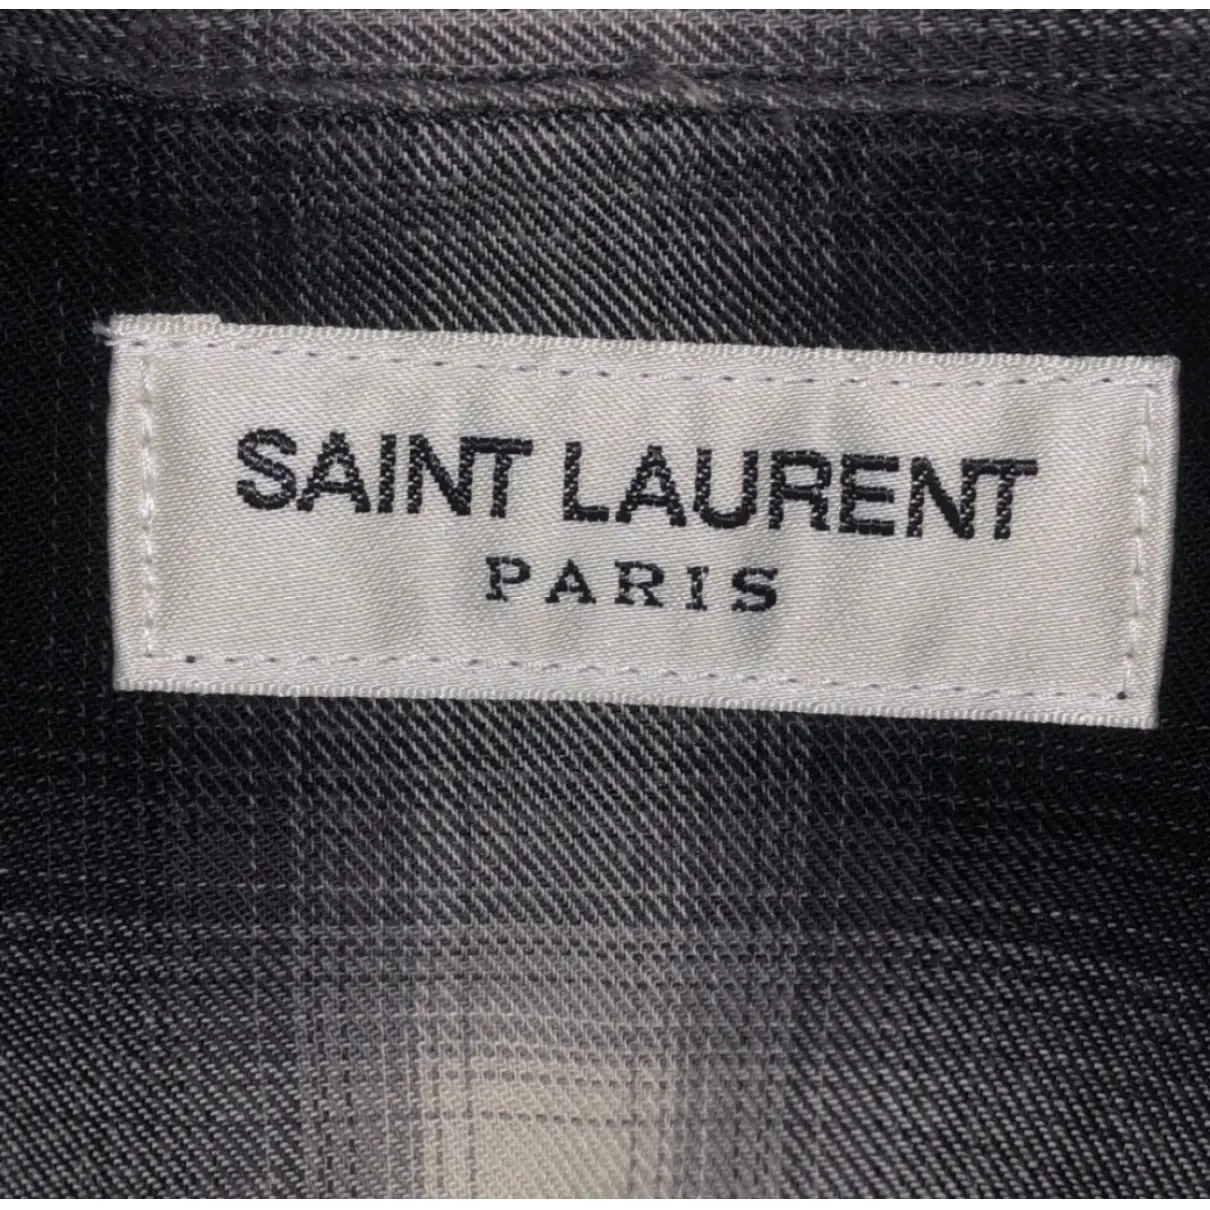 Buy Saint Laurent Shirt online